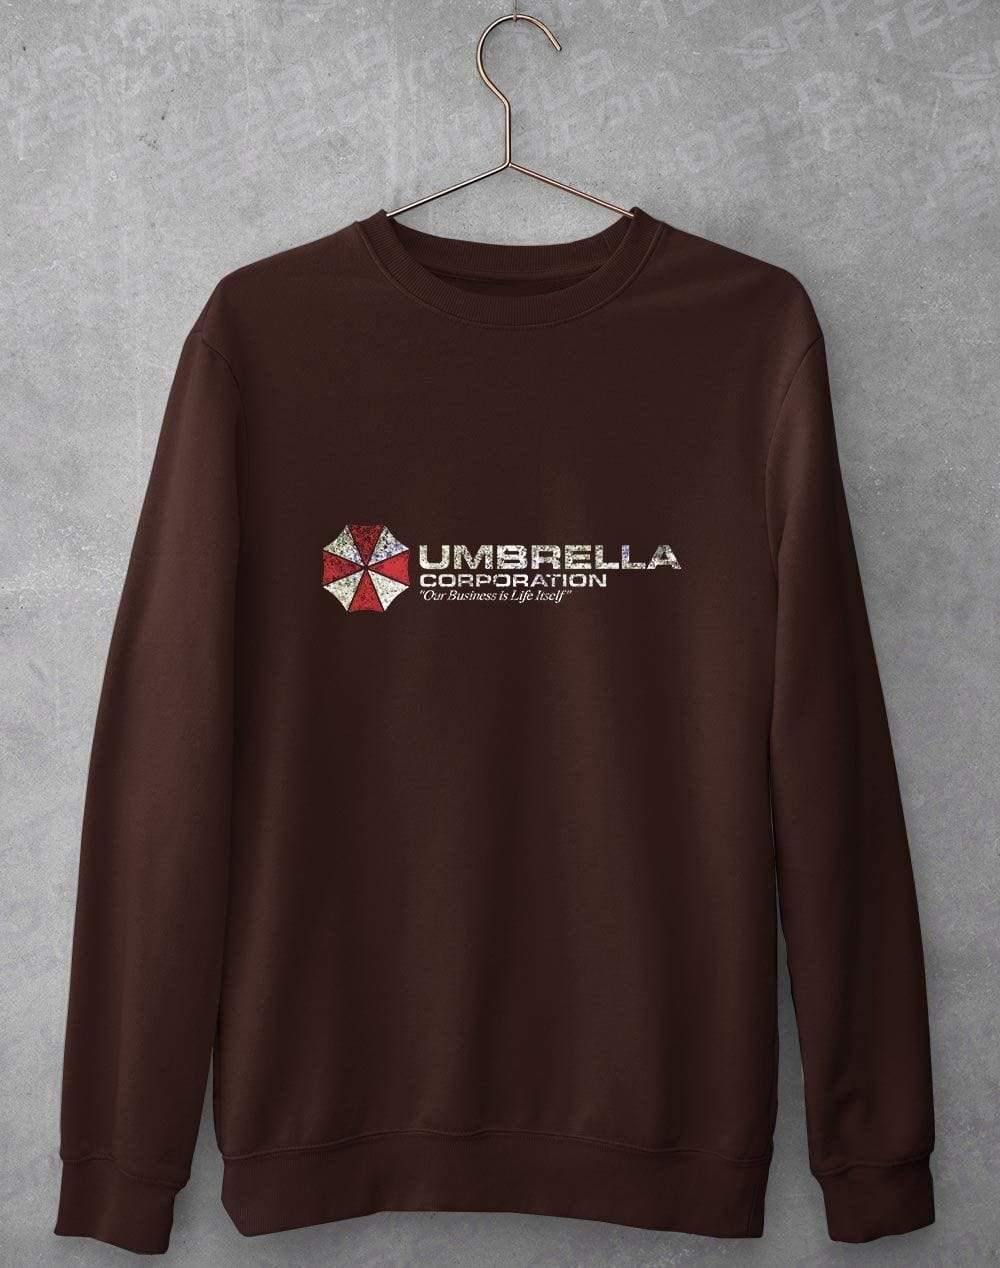 Umbrella Corporation Sweatshirt S / Chocolate  - Off World Tees